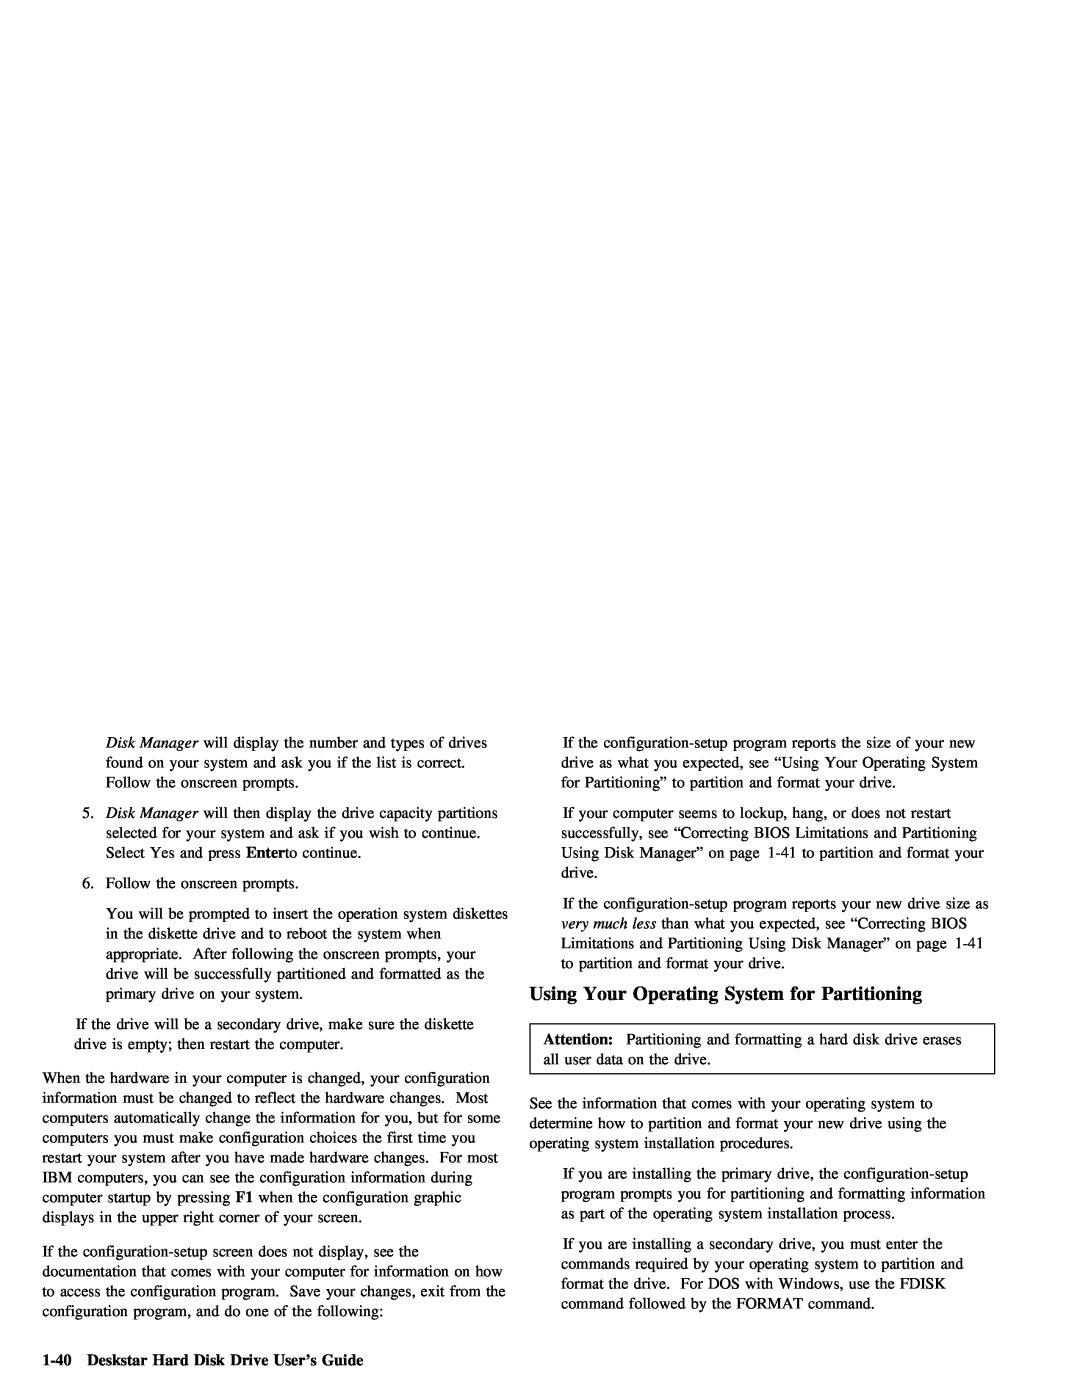 IBM ATA-3 manual Deskstar Hard Disk Drive User’s Guide, System 